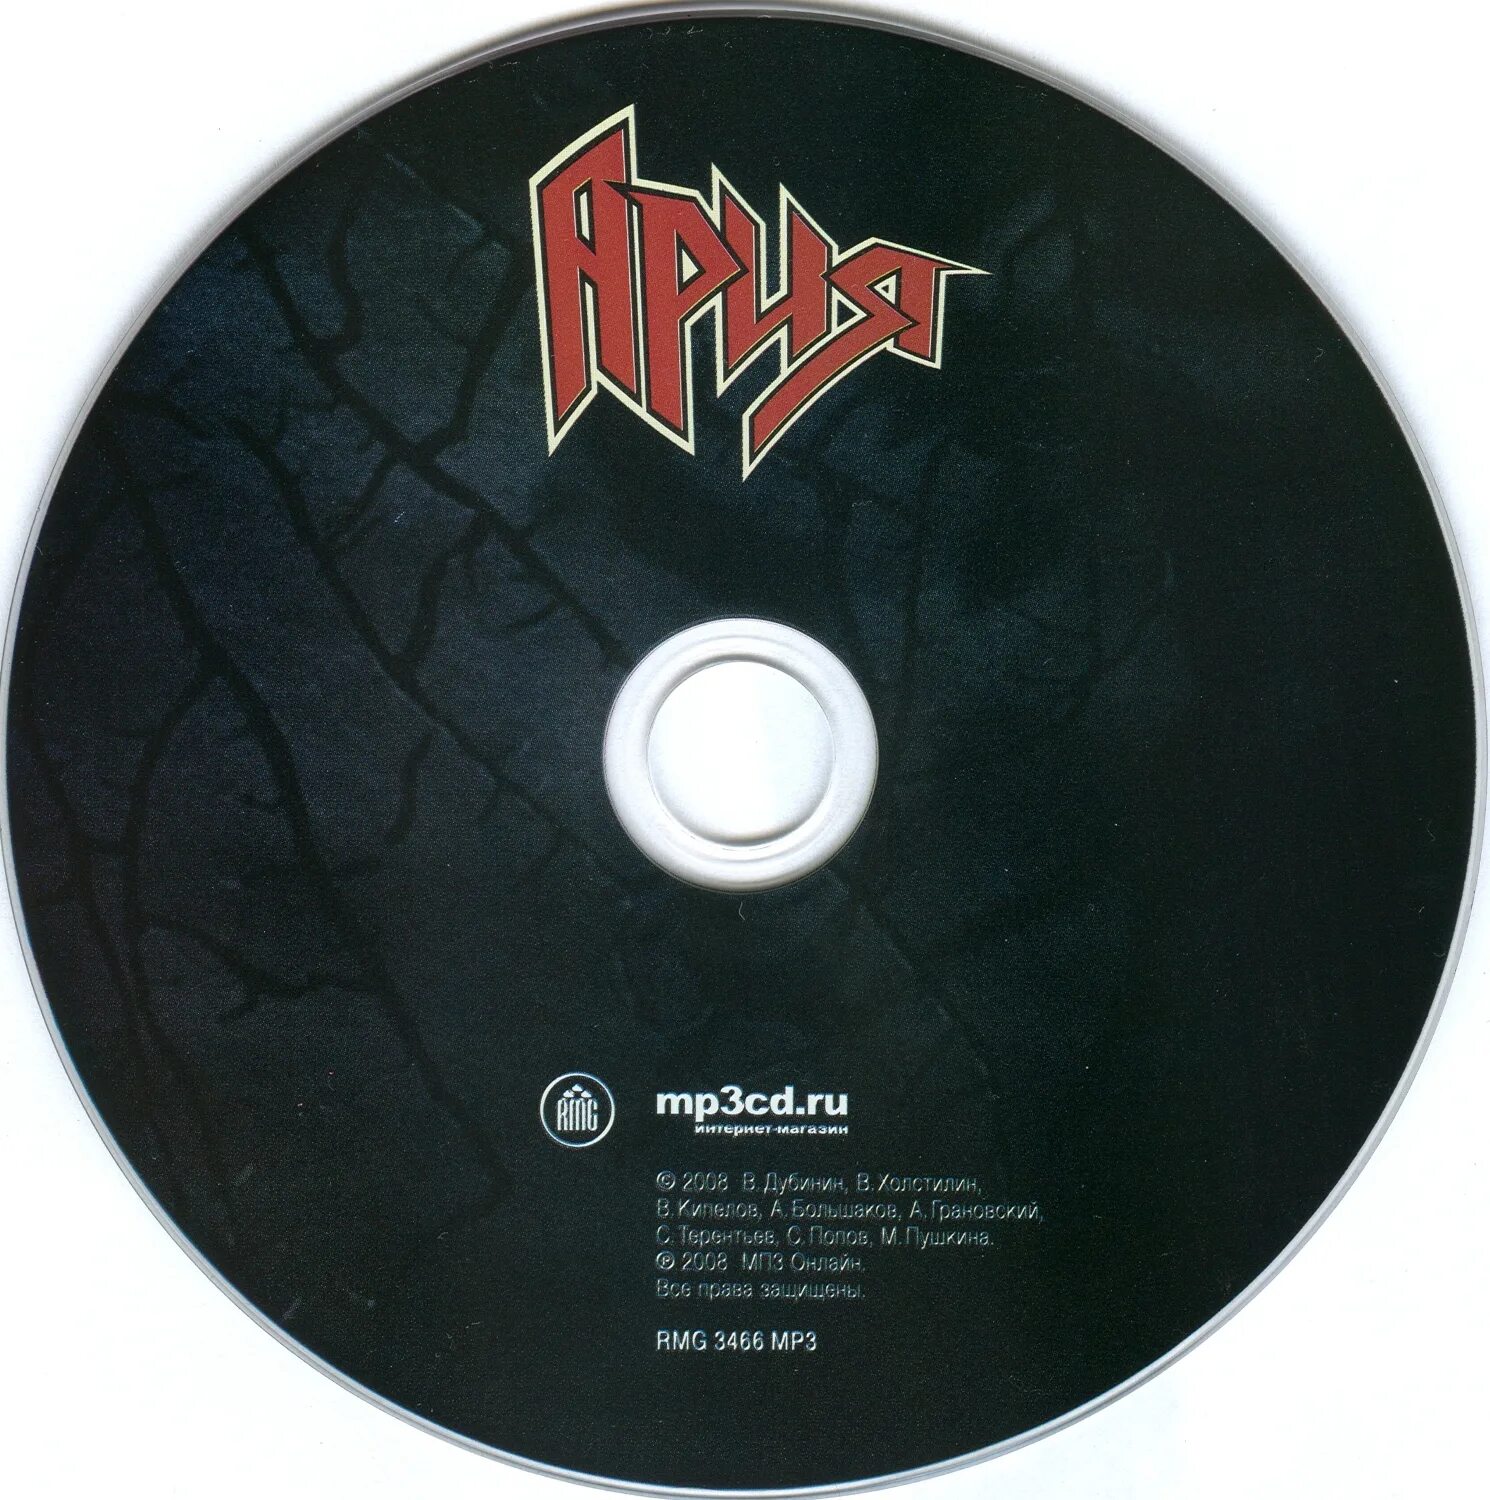 Ария мр3. Ария мр3 диск РМГ. Диск Ария 1988г. Кипелов + Ария мп3 диски. Ария mp3 collection диск для DVD.